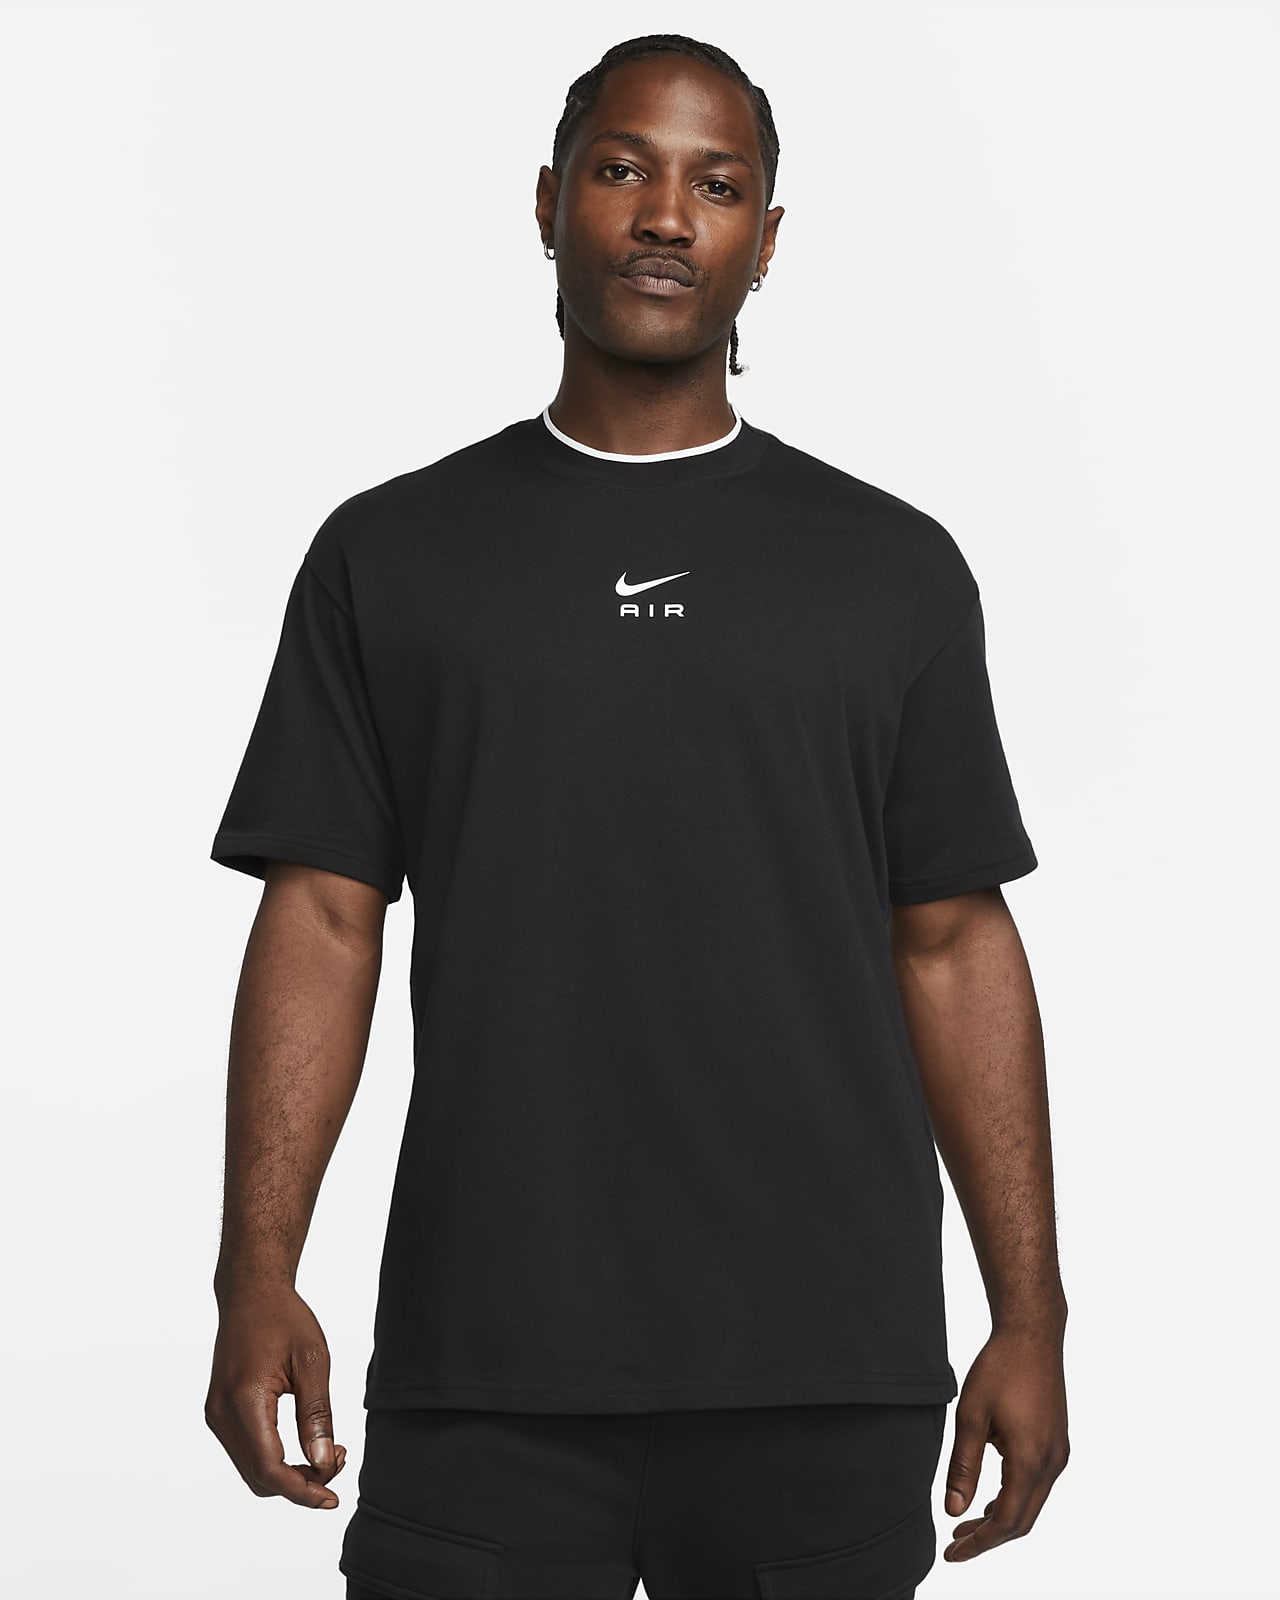 Air Men's T-Shirt. Nike.com